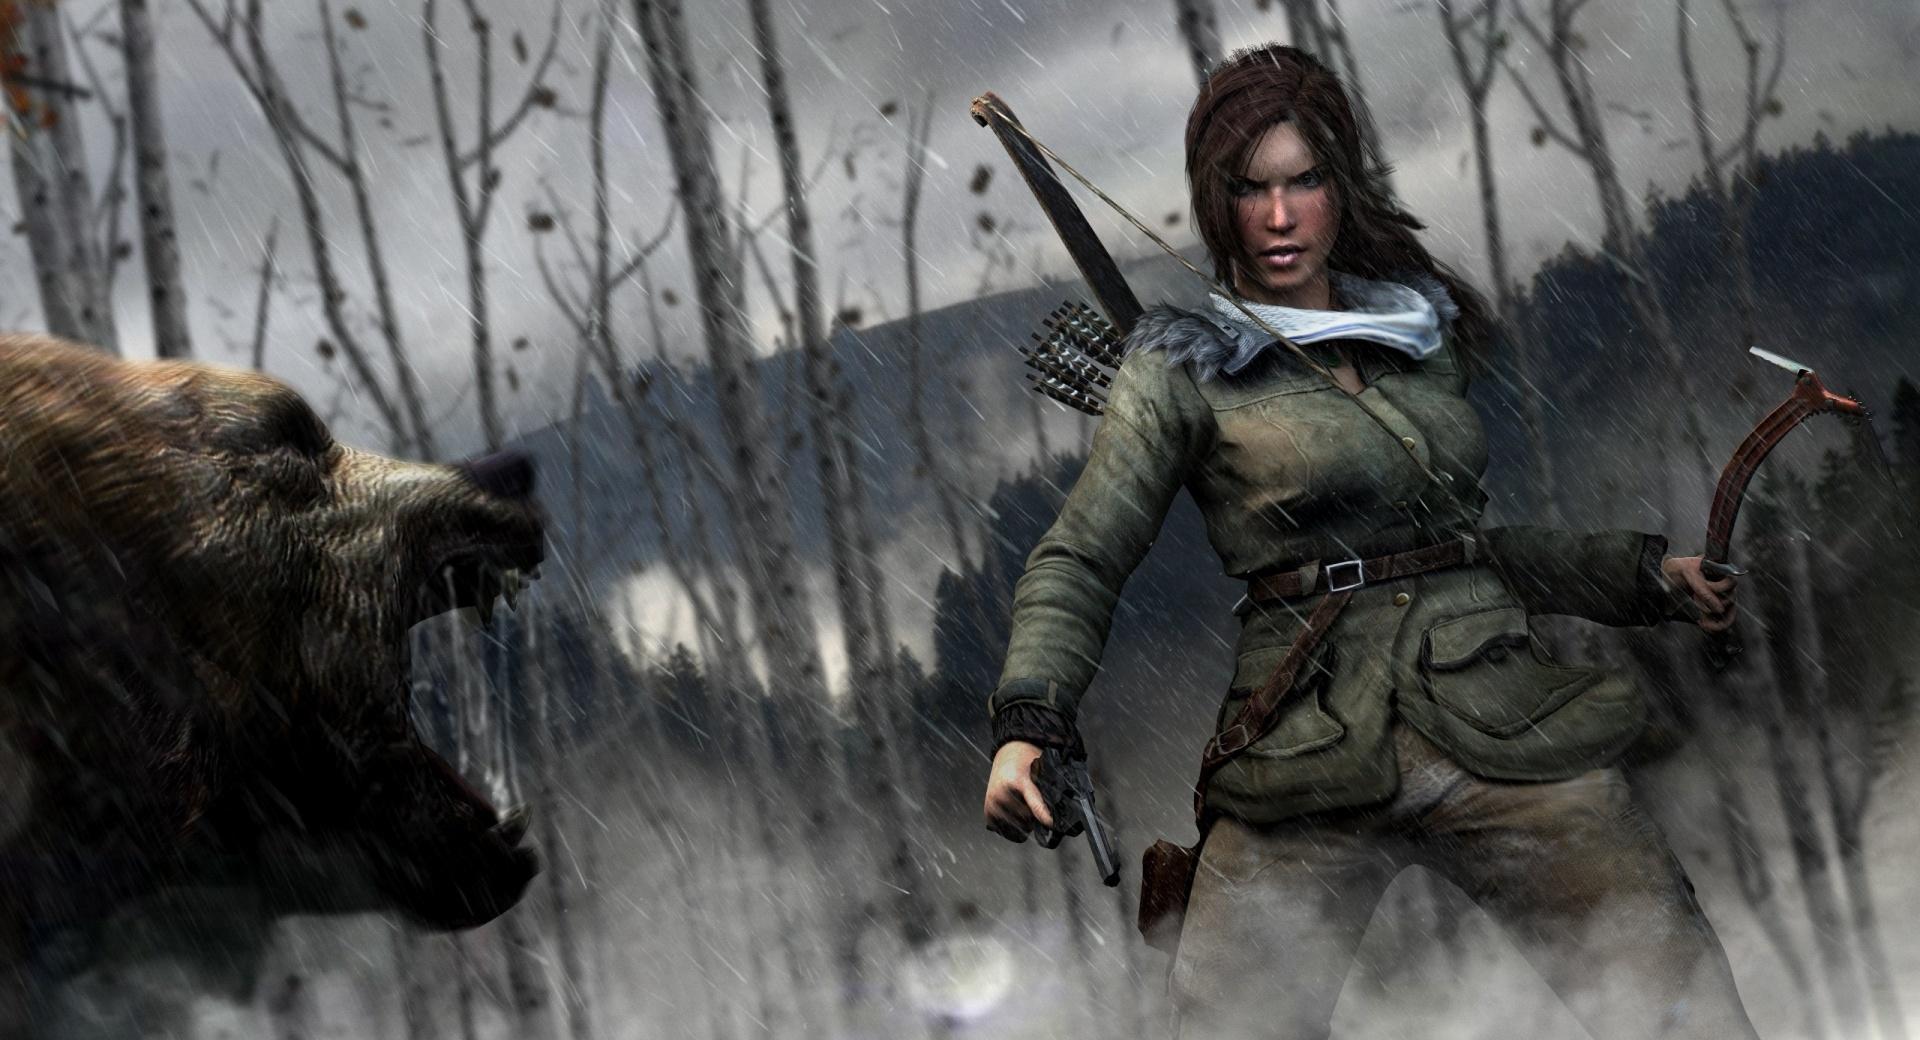 Rise of the Tomb Raider Lara Croft vs Bear at 1024 x 768 size wallpapers HD quality